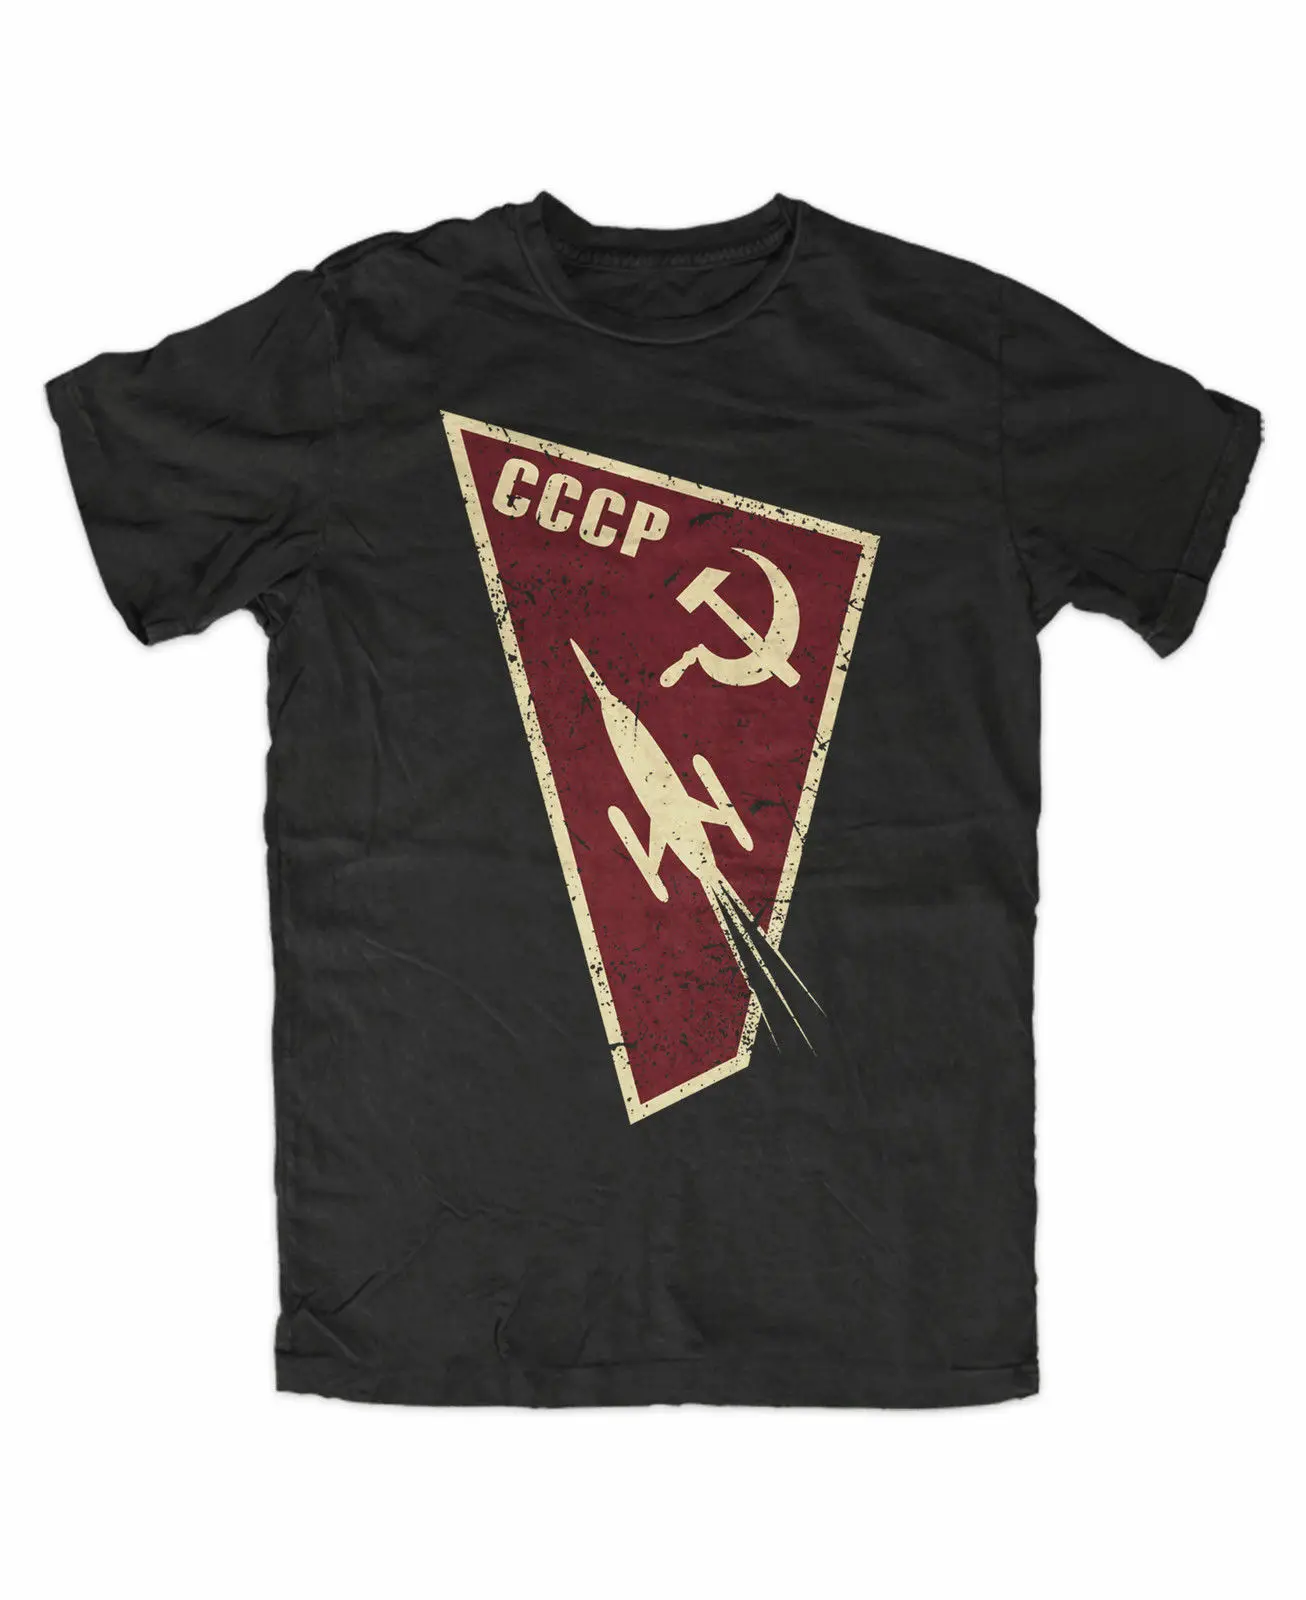 

CCCP Kosmonaut Space Program T-Shirt UDSSR Russia Roskosmos Summer Cotton O-Neck Short Sleeve Men T Shirt